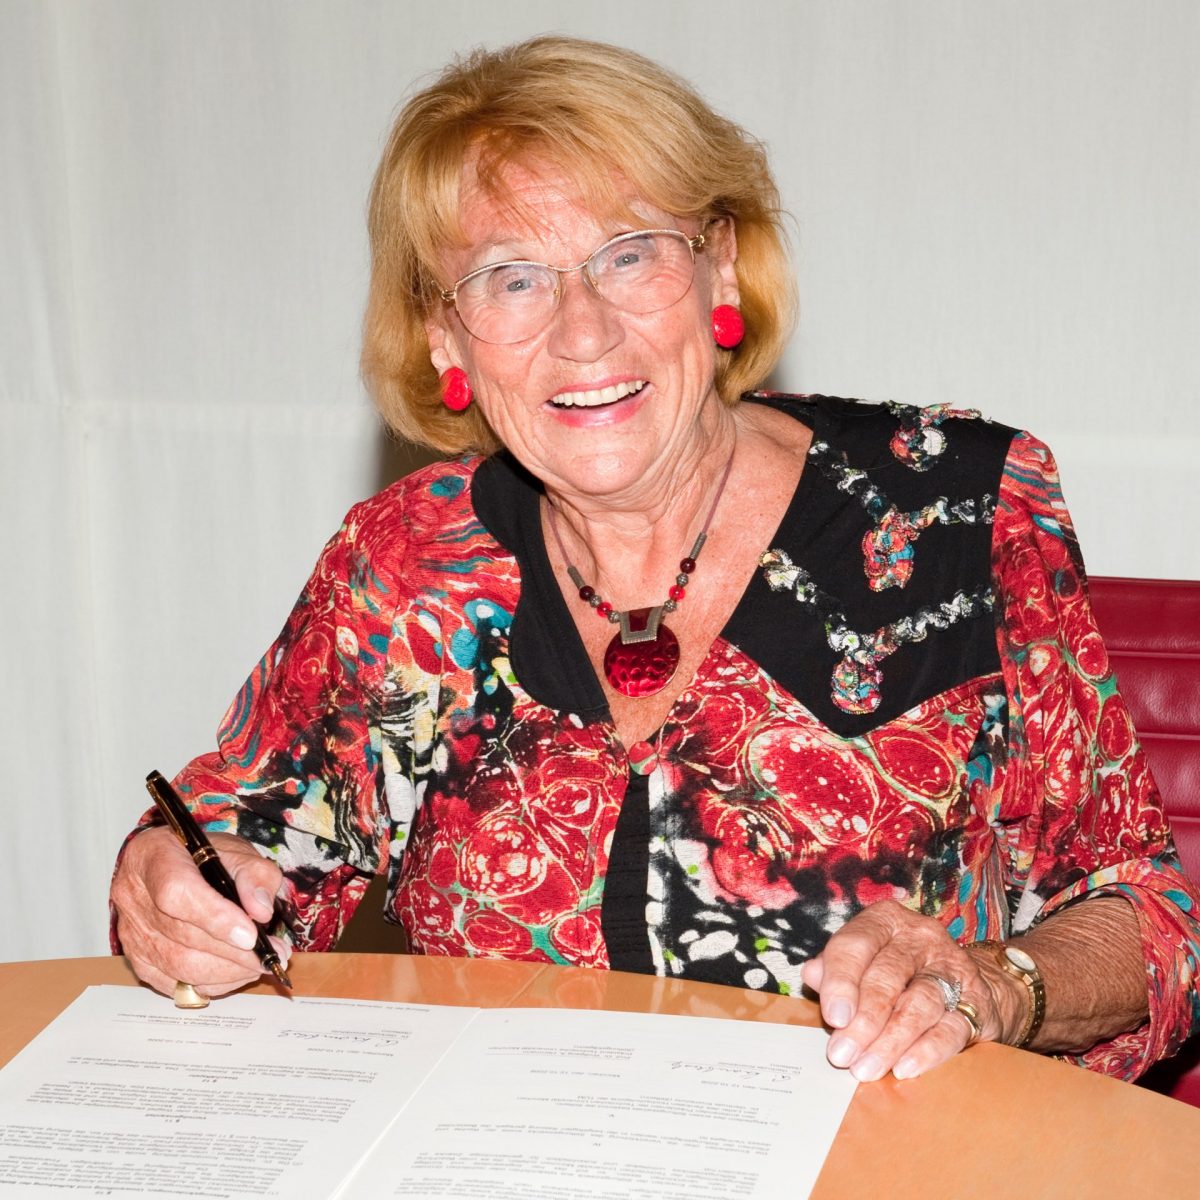 TUM Alumna Gertrude Krombholz is signing the contract to establish the Dr. Gertrude Krombholz Foundation.